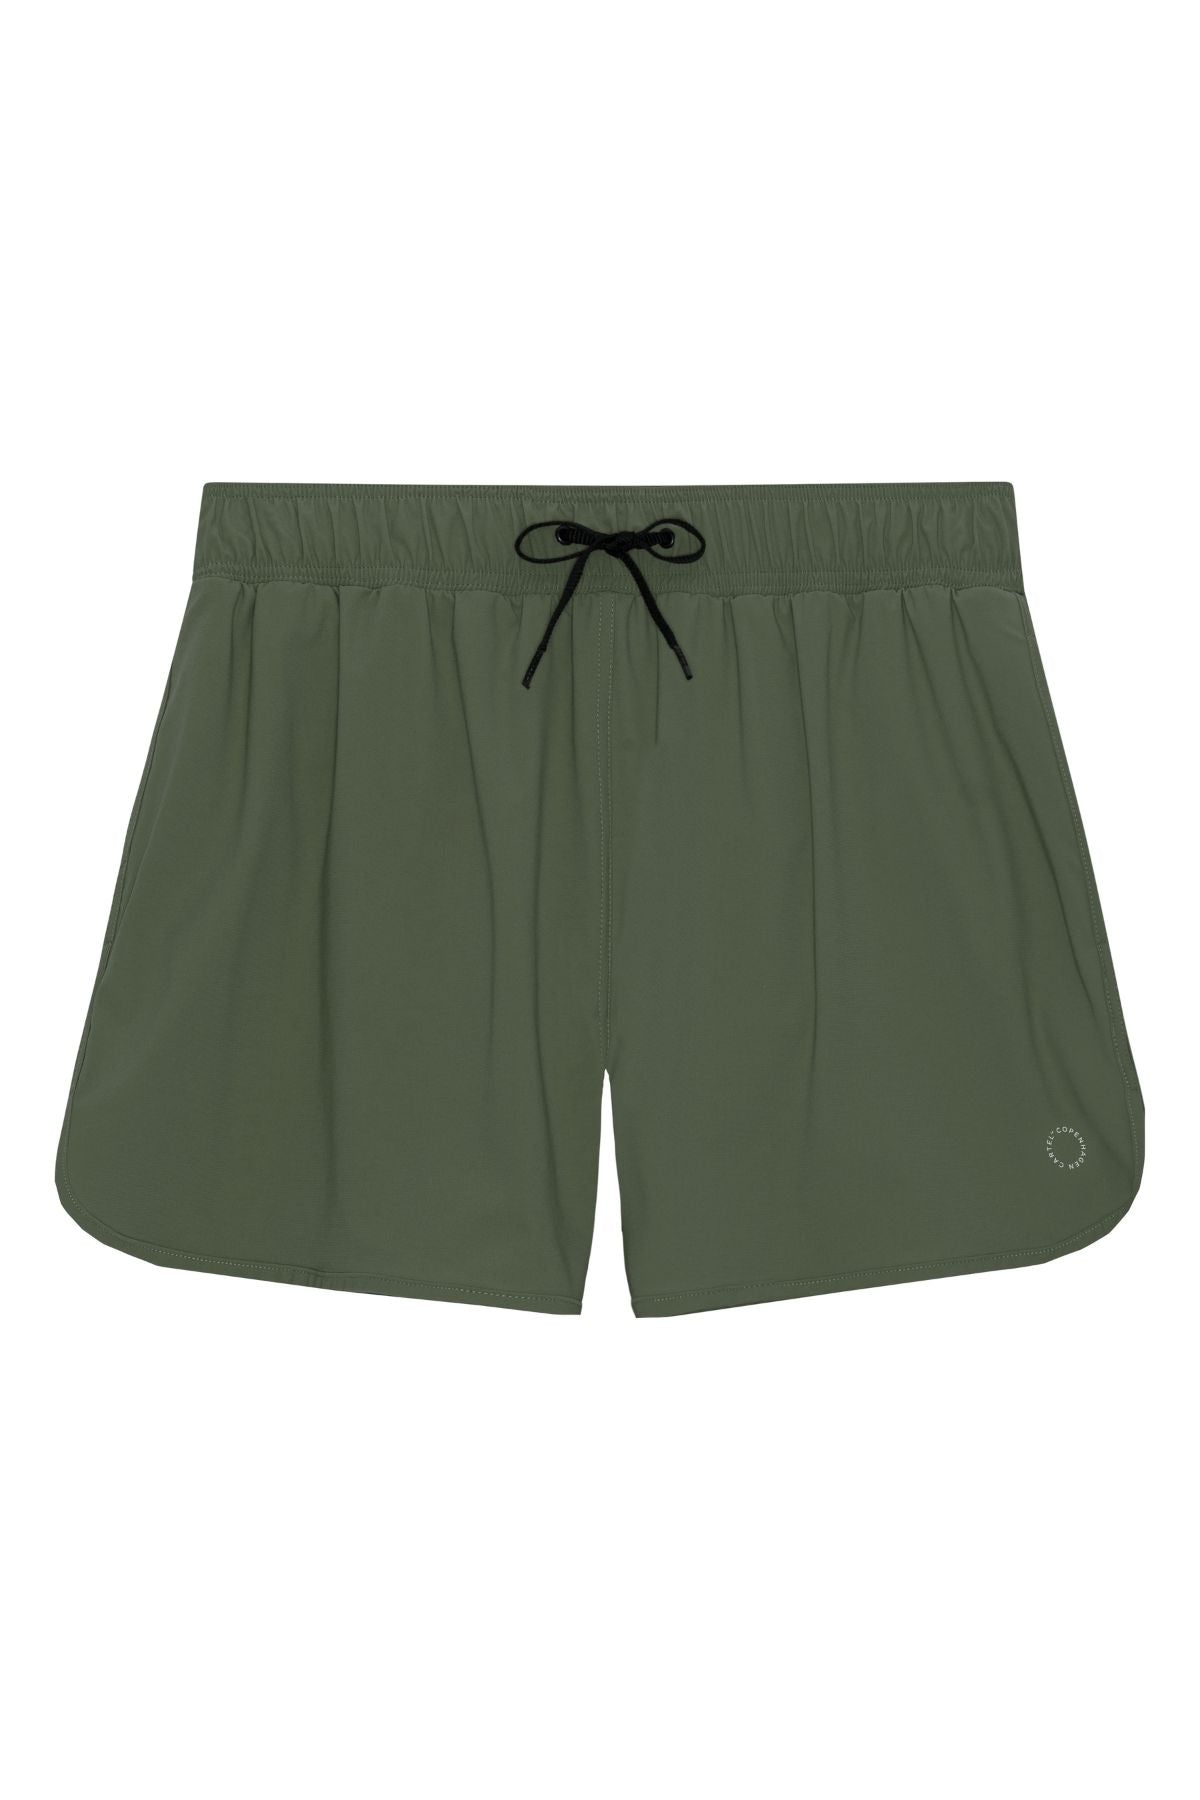 Balian men’s shorts - Kale